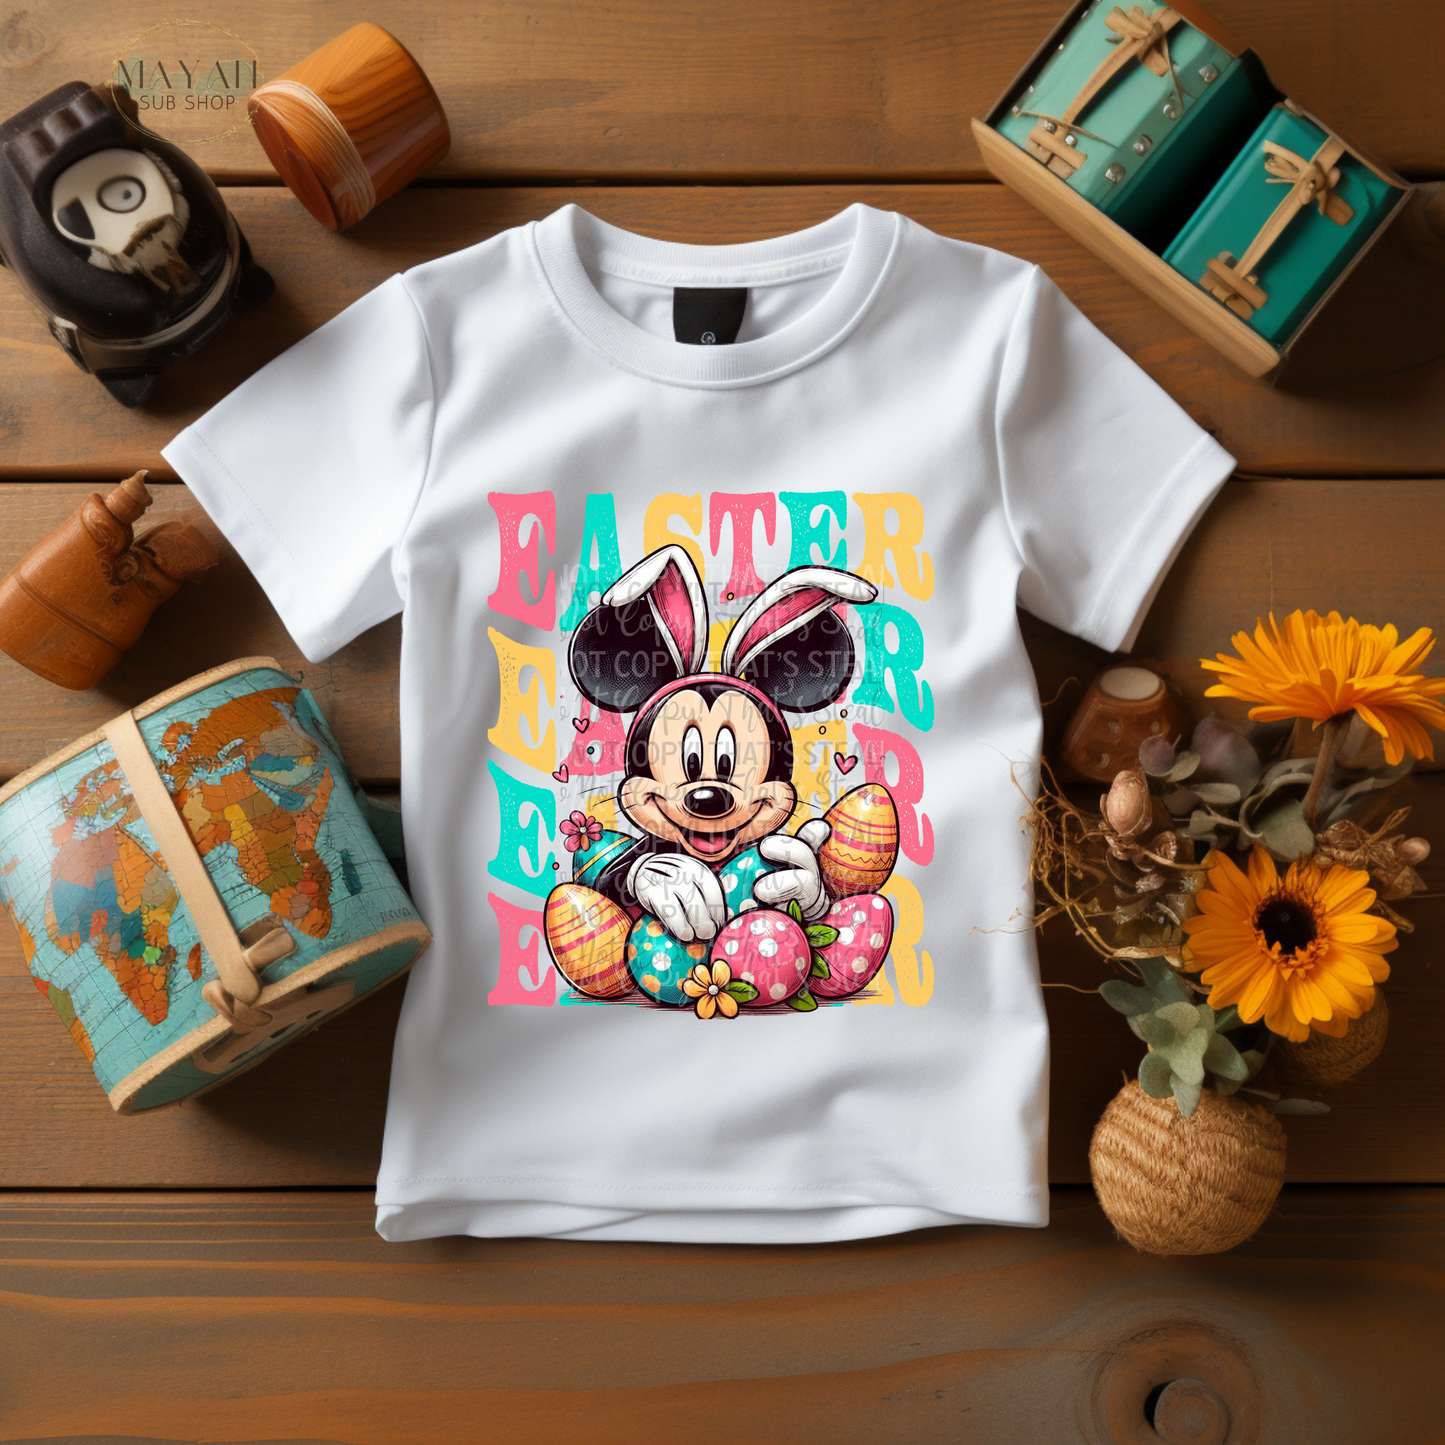 Easter mouse kids shirt. -Mayan Sub Shop